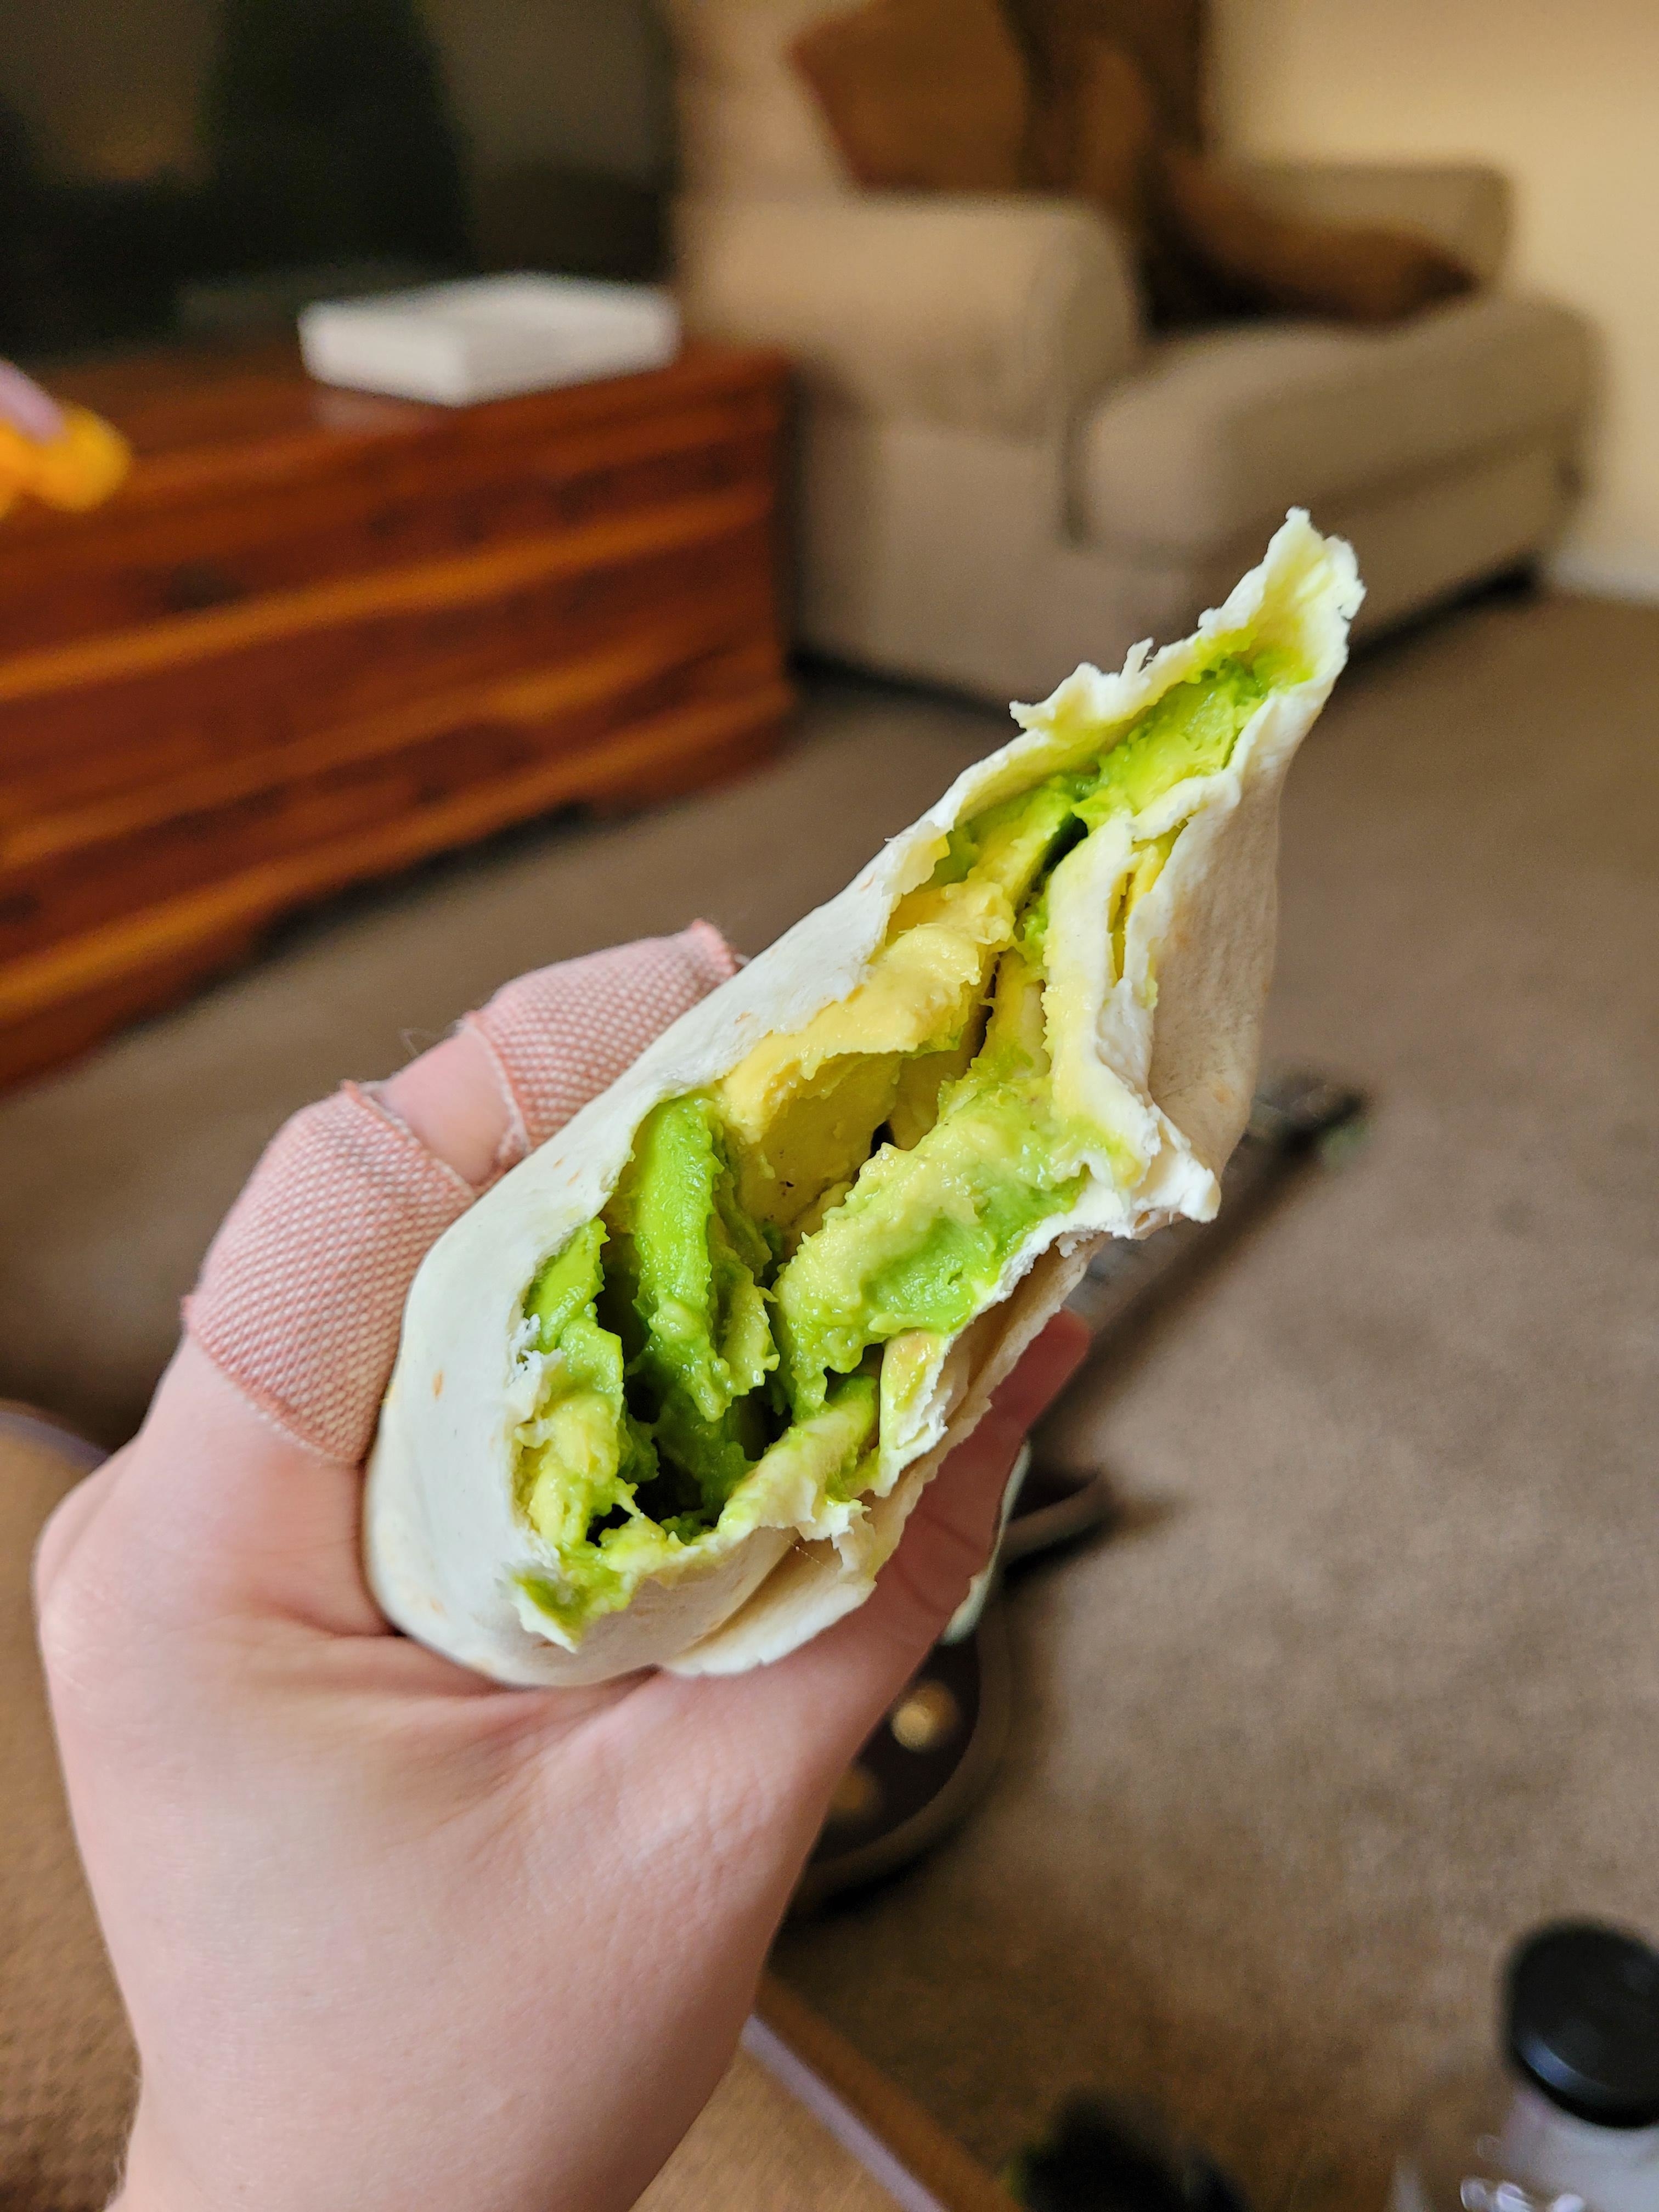 Hand holding a half-eaten avocado wrap indoors